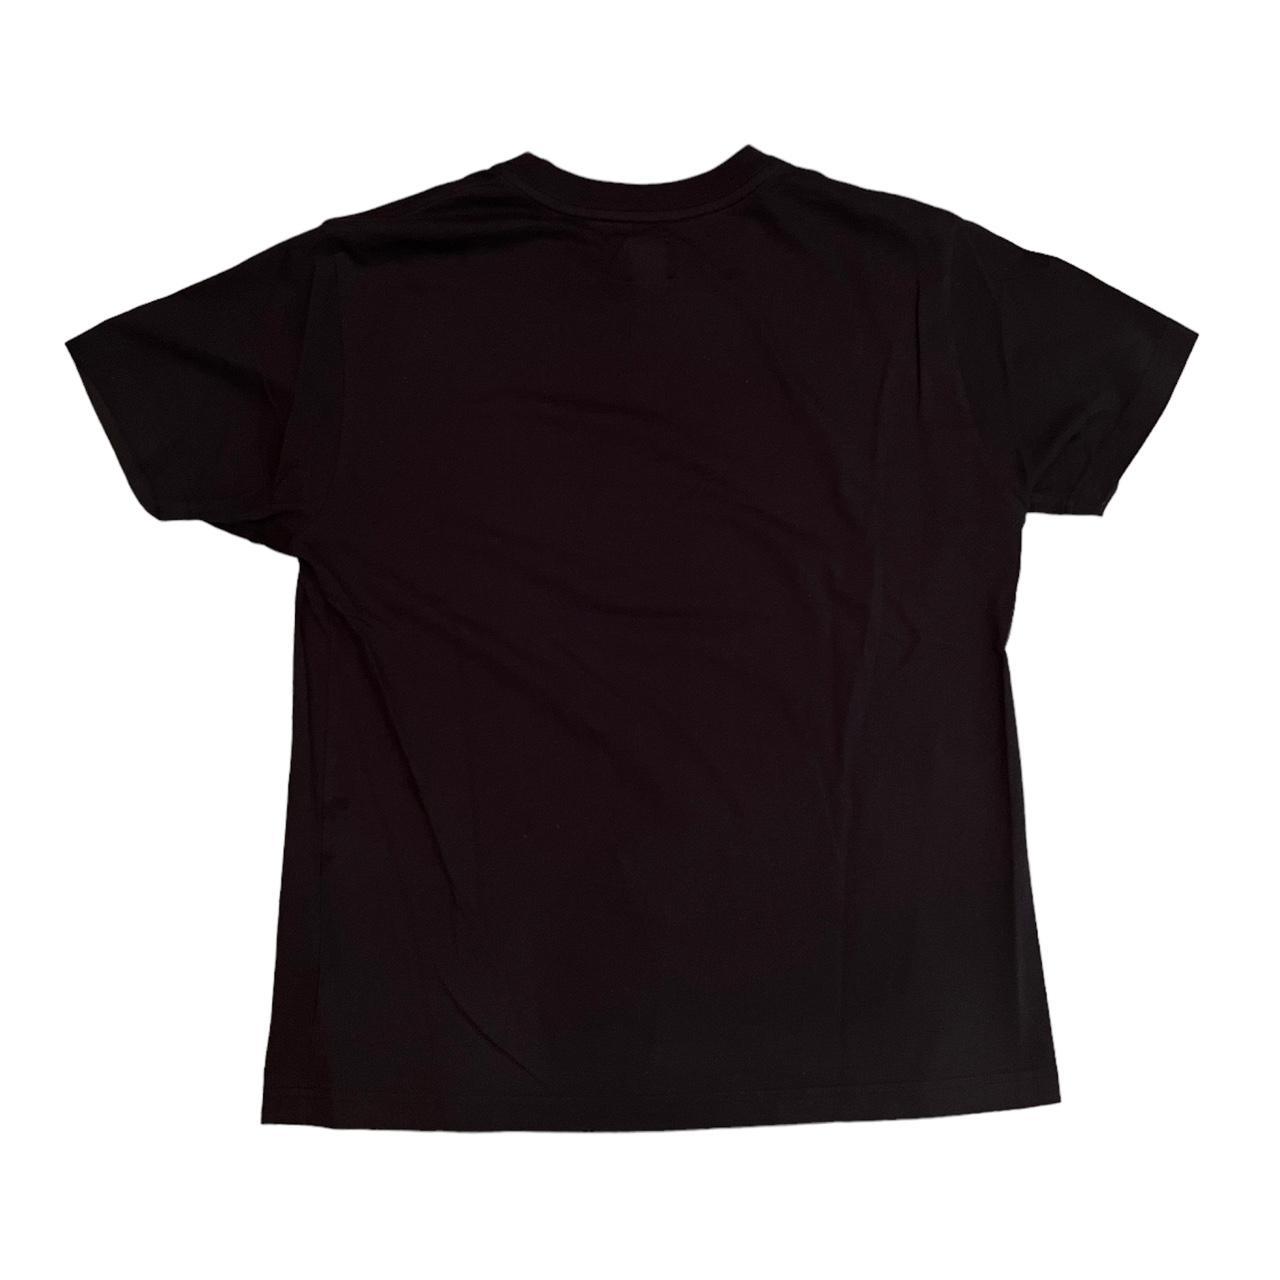 New Balance Men's Black and Grey T-shirt (4)